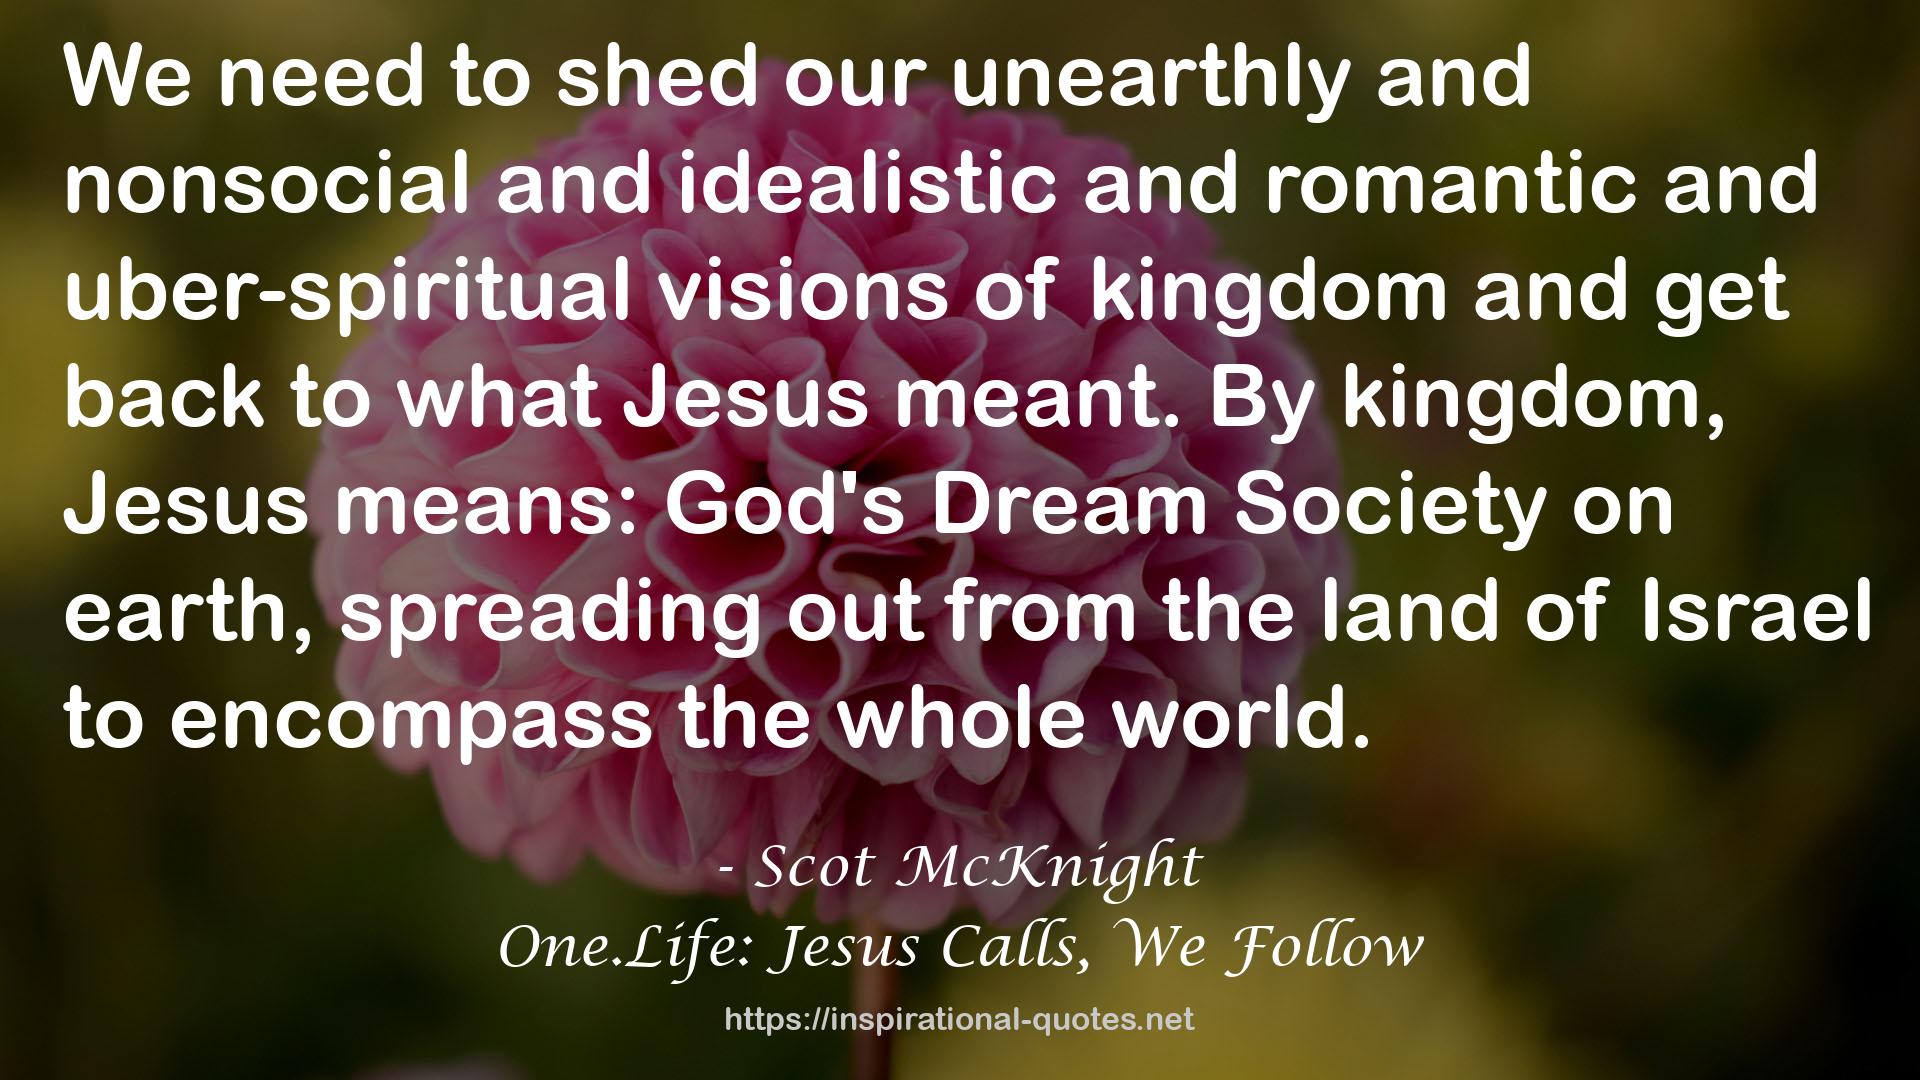 One.Life: Jesus Calls, We Follow QUOTES